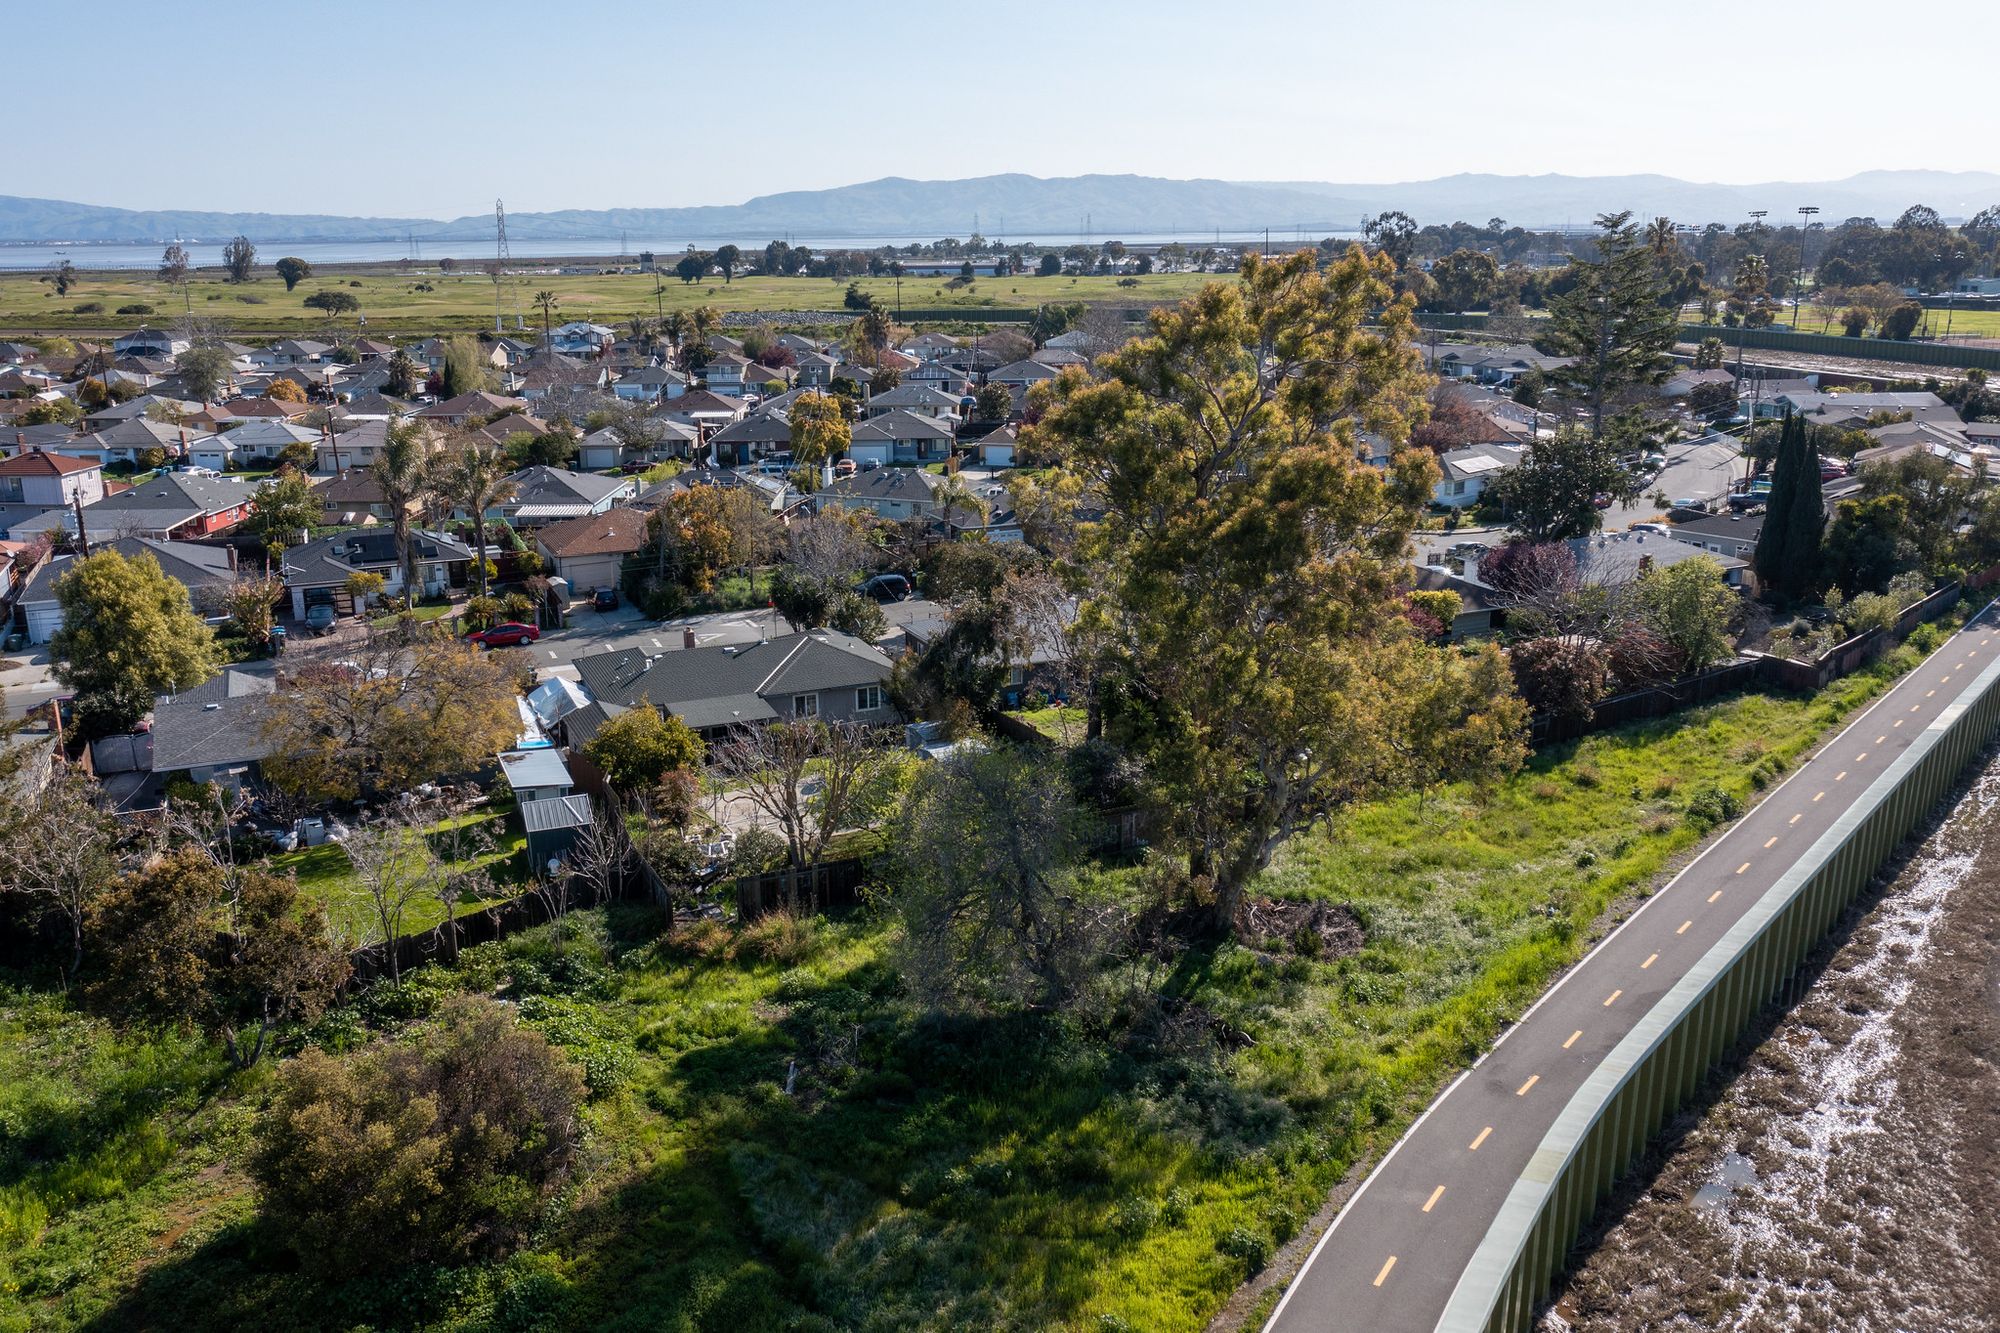 East Palo Alto Should Acquire 0.66 Acre Land for $100k for New Park